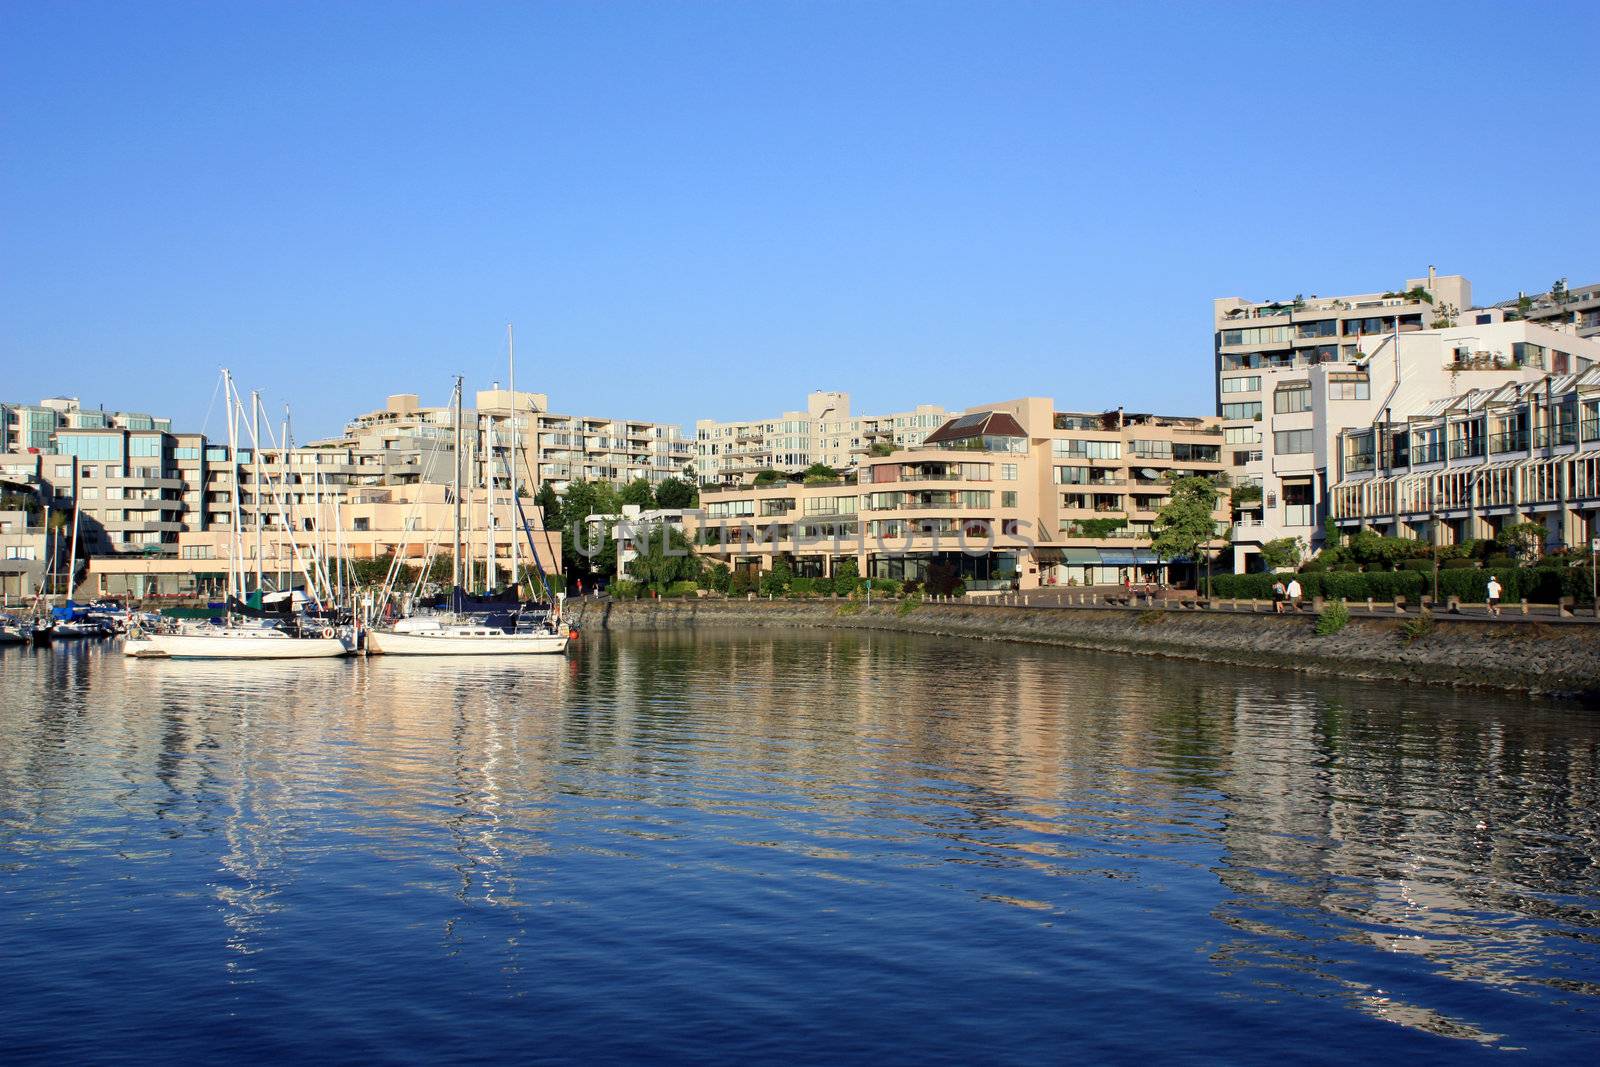 Waterfront Condominiums And Marina In Vancouver (British Columbia, Canada)